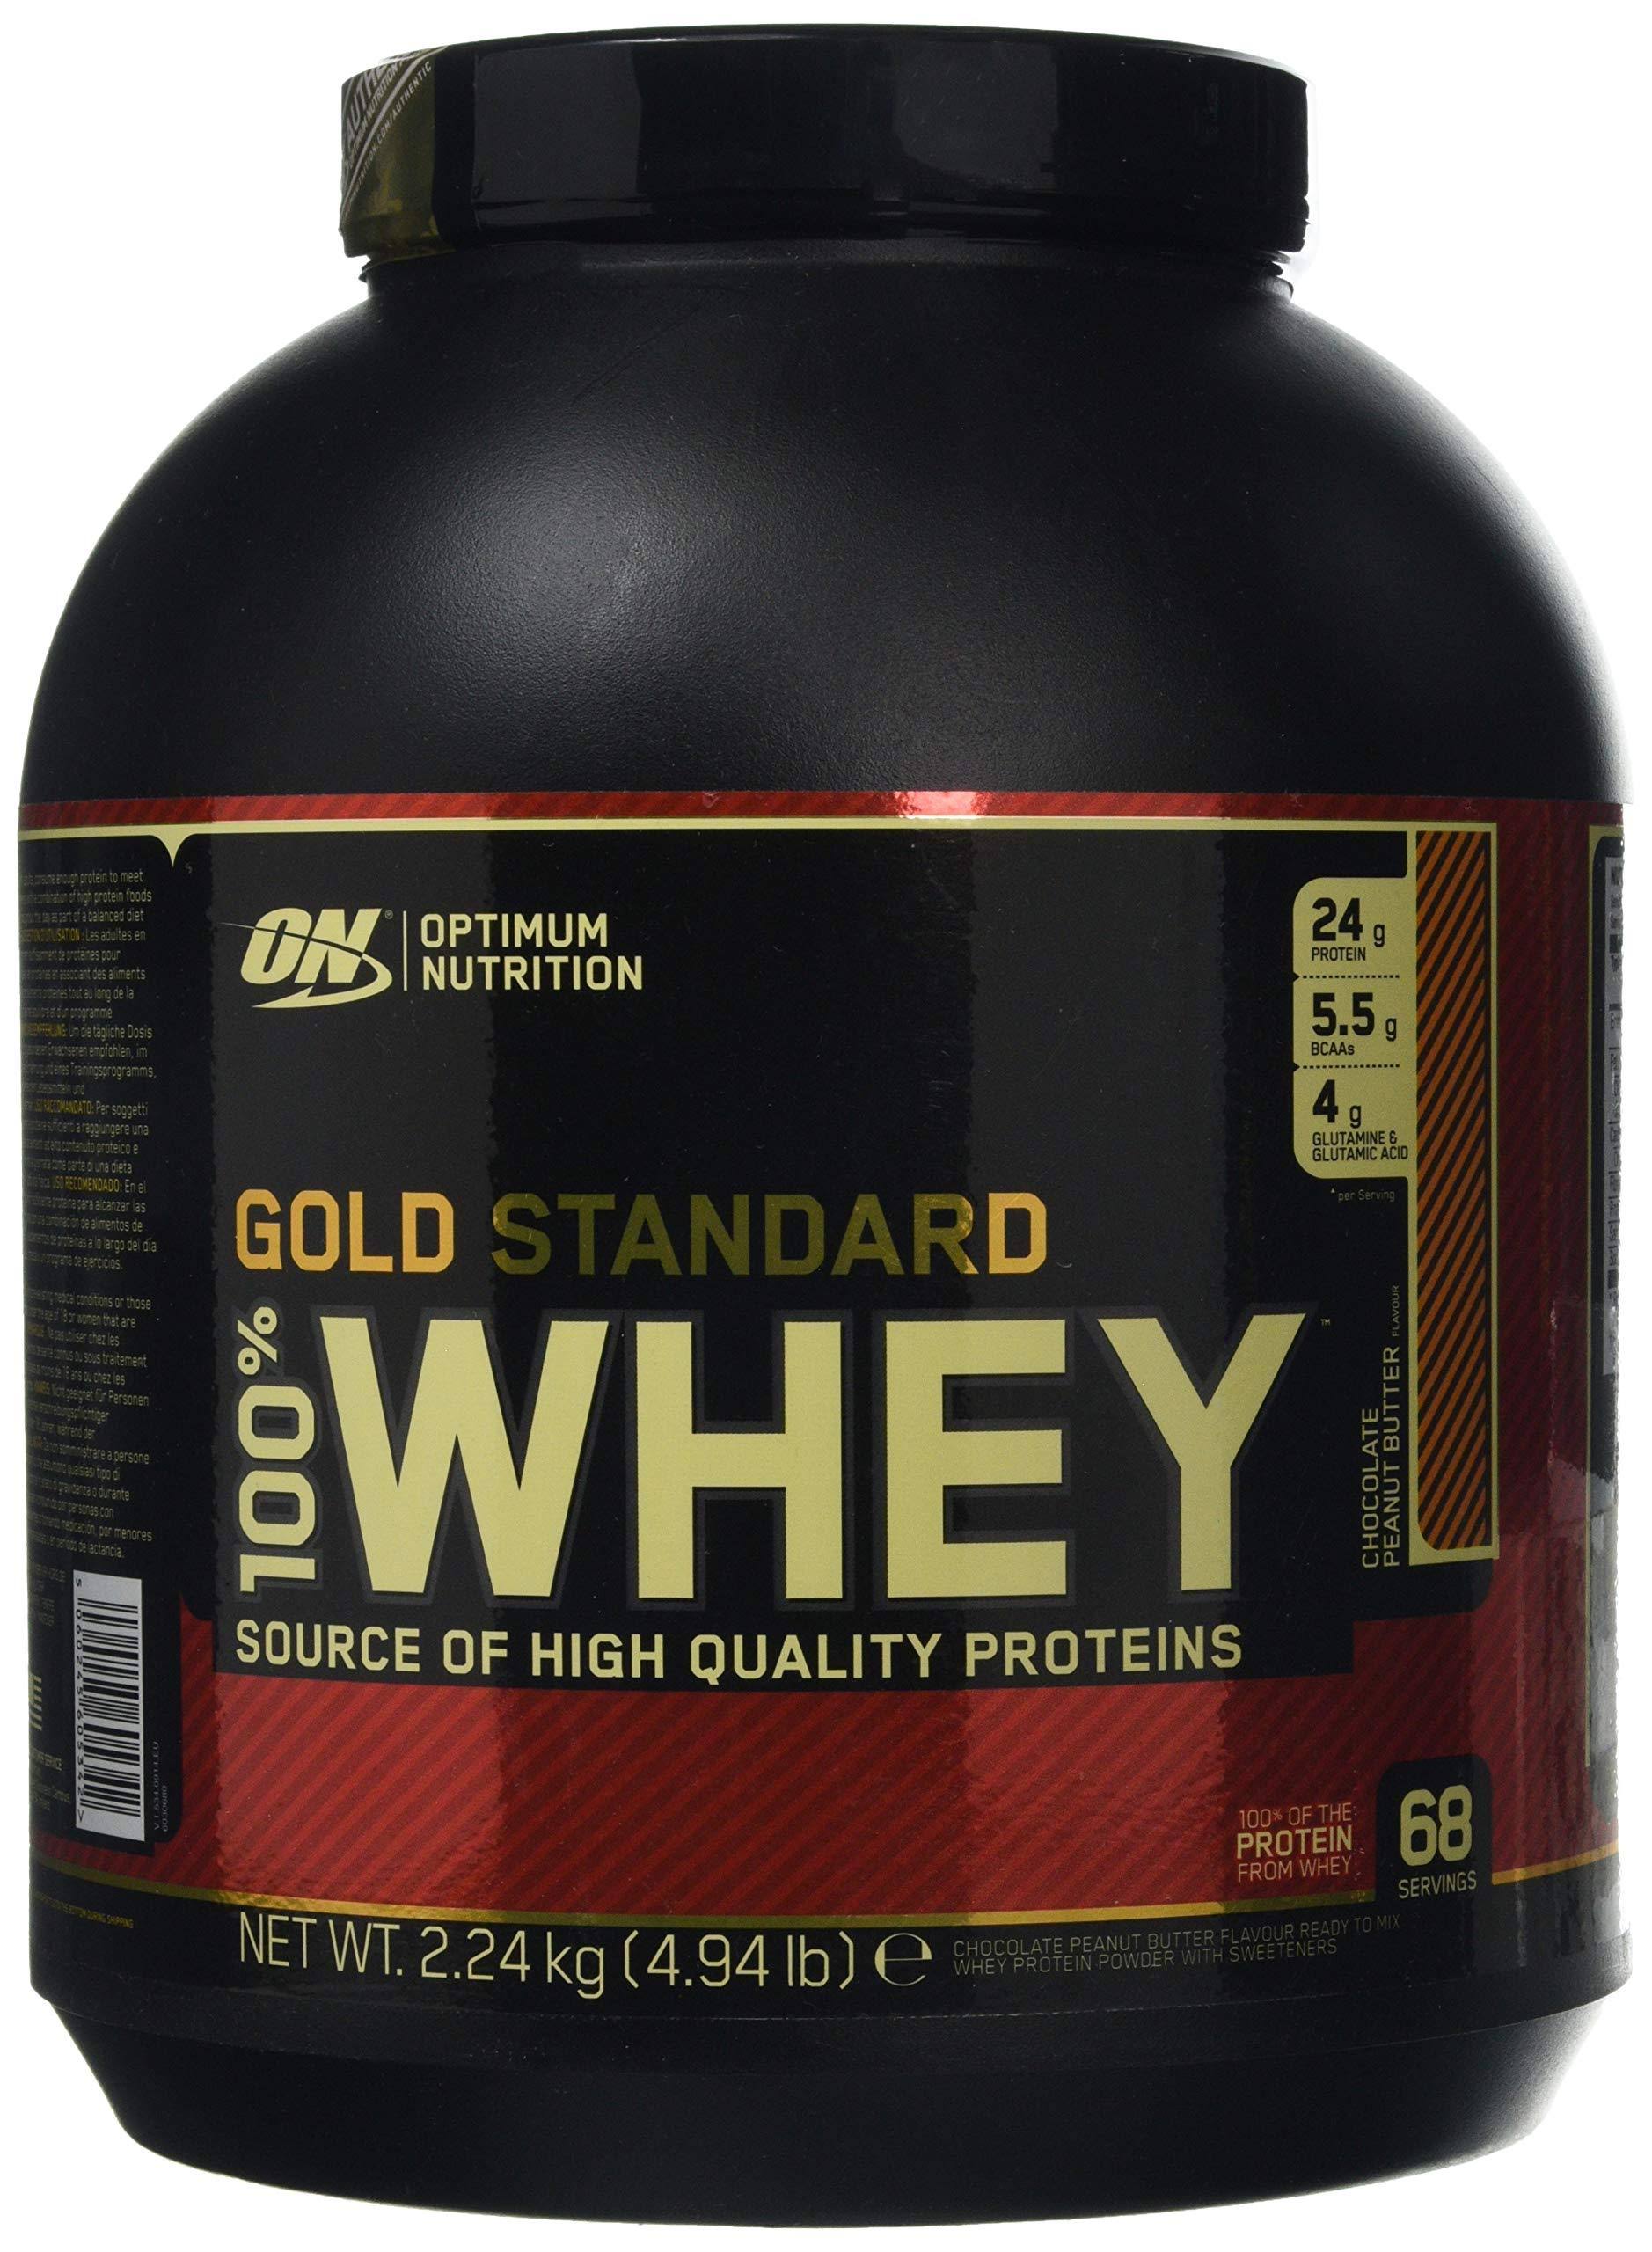 Optimum Nutrition Gold Standard Whey Protein Powder 2.27kg, Chocolate Peanut Butter